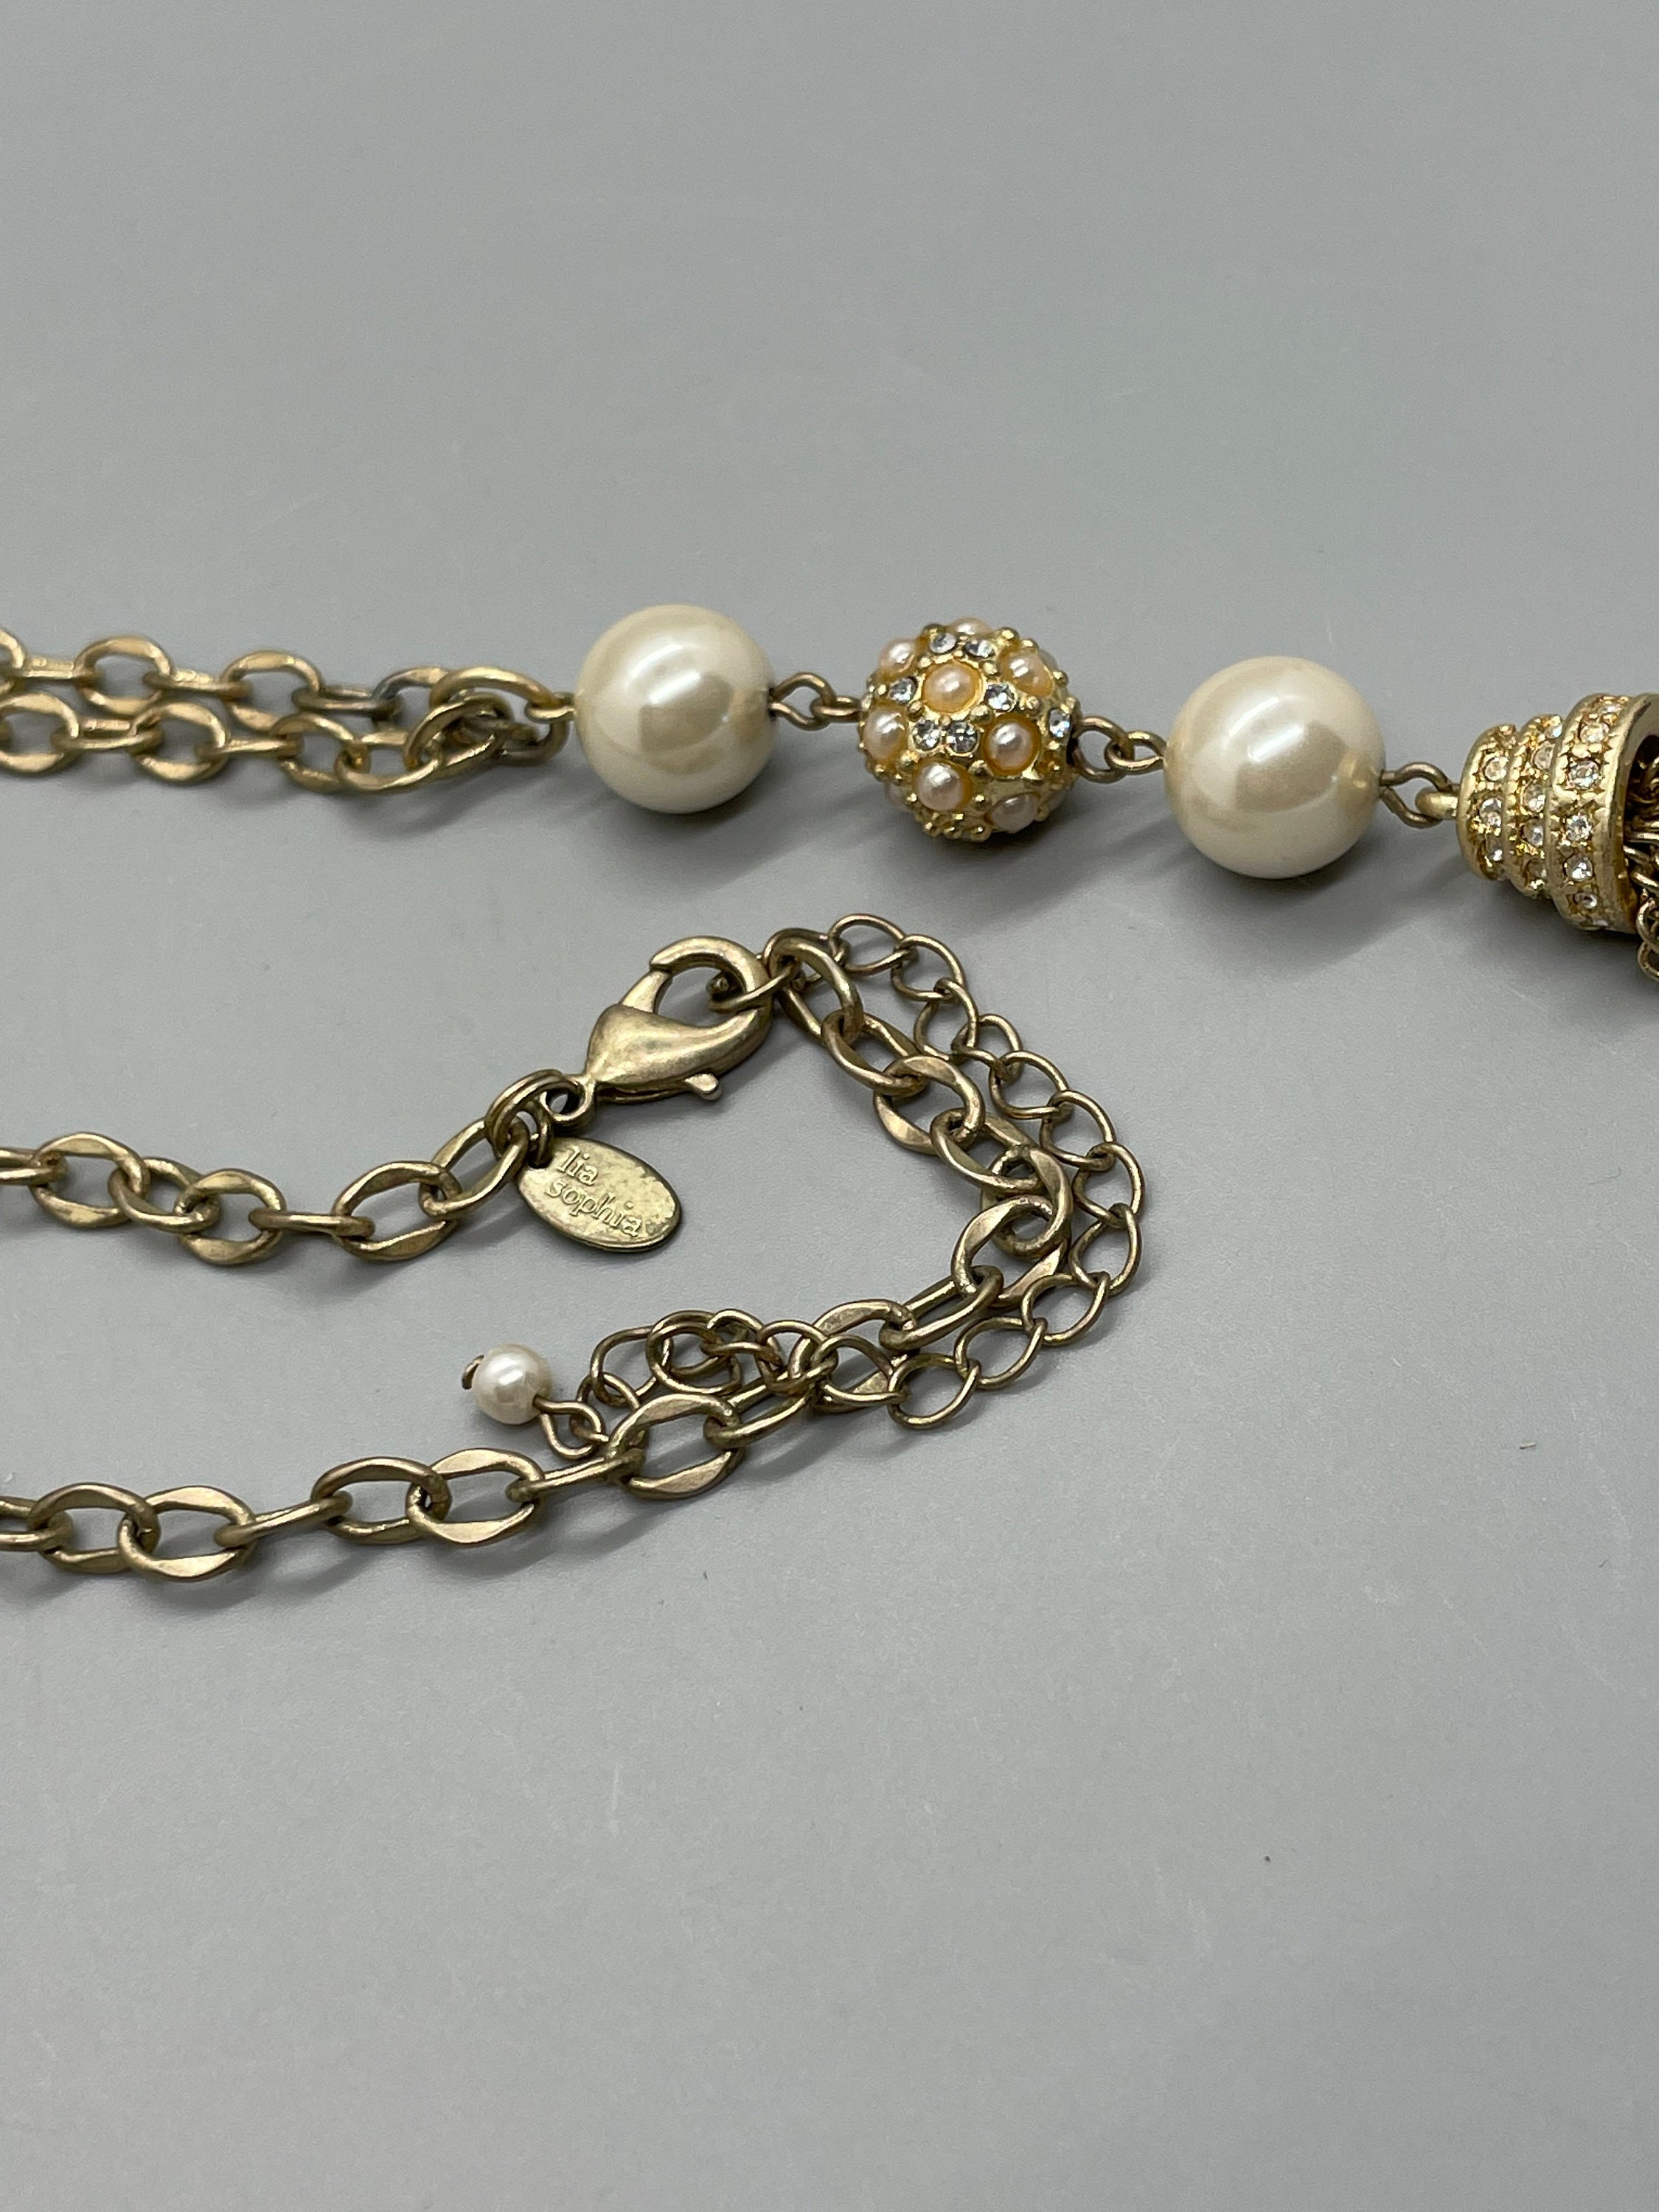 22K Gold Lakshmiji Pendant With Navarathan Stones ,Cz , Japanese Culture  Pearls & Pearls (Temple Jewellery) - 235-GP5840 in 16.350 Grams